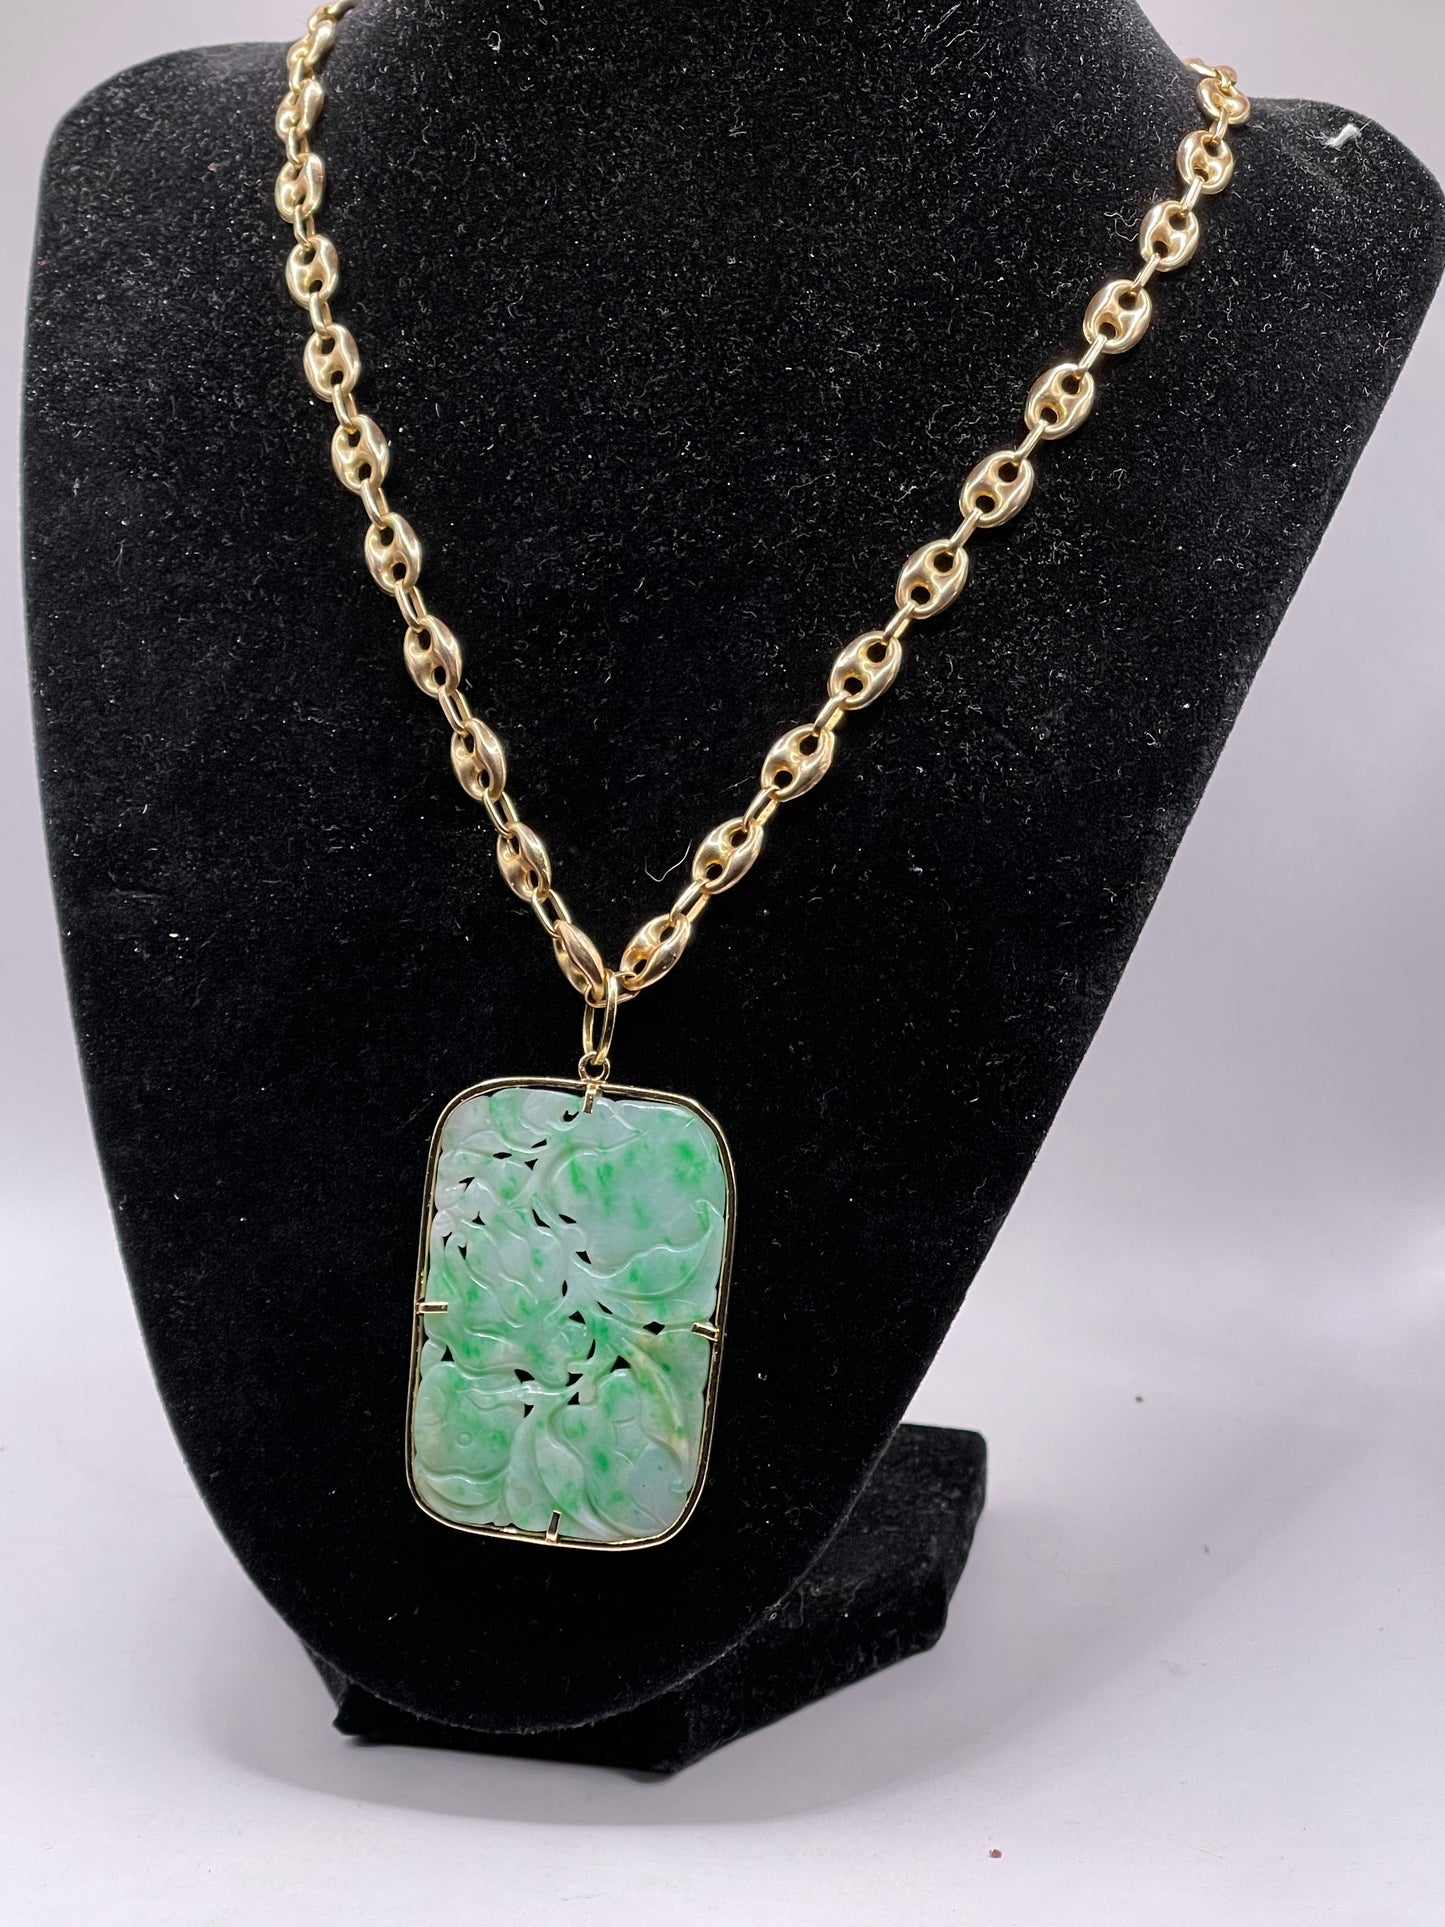 Carved vintage jadeite plaque pendant